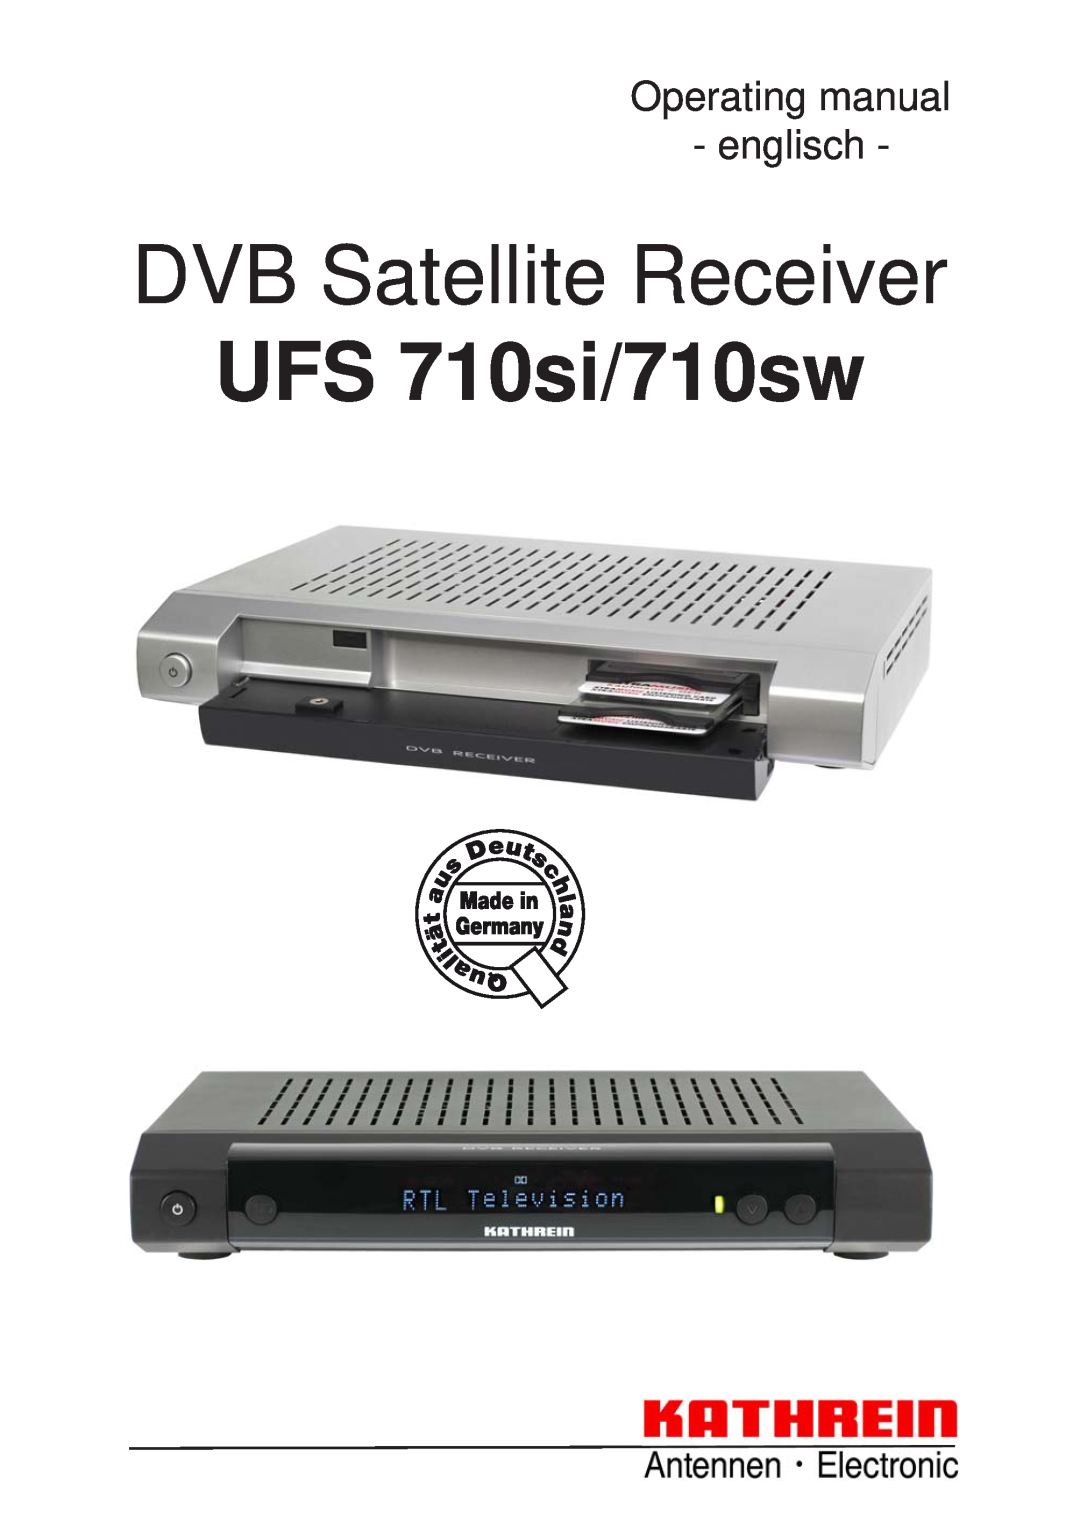 Kathrein UFS 710sw manual DVB Satellite Receiver, UFS 710si/710sw, Operating manual englisch 